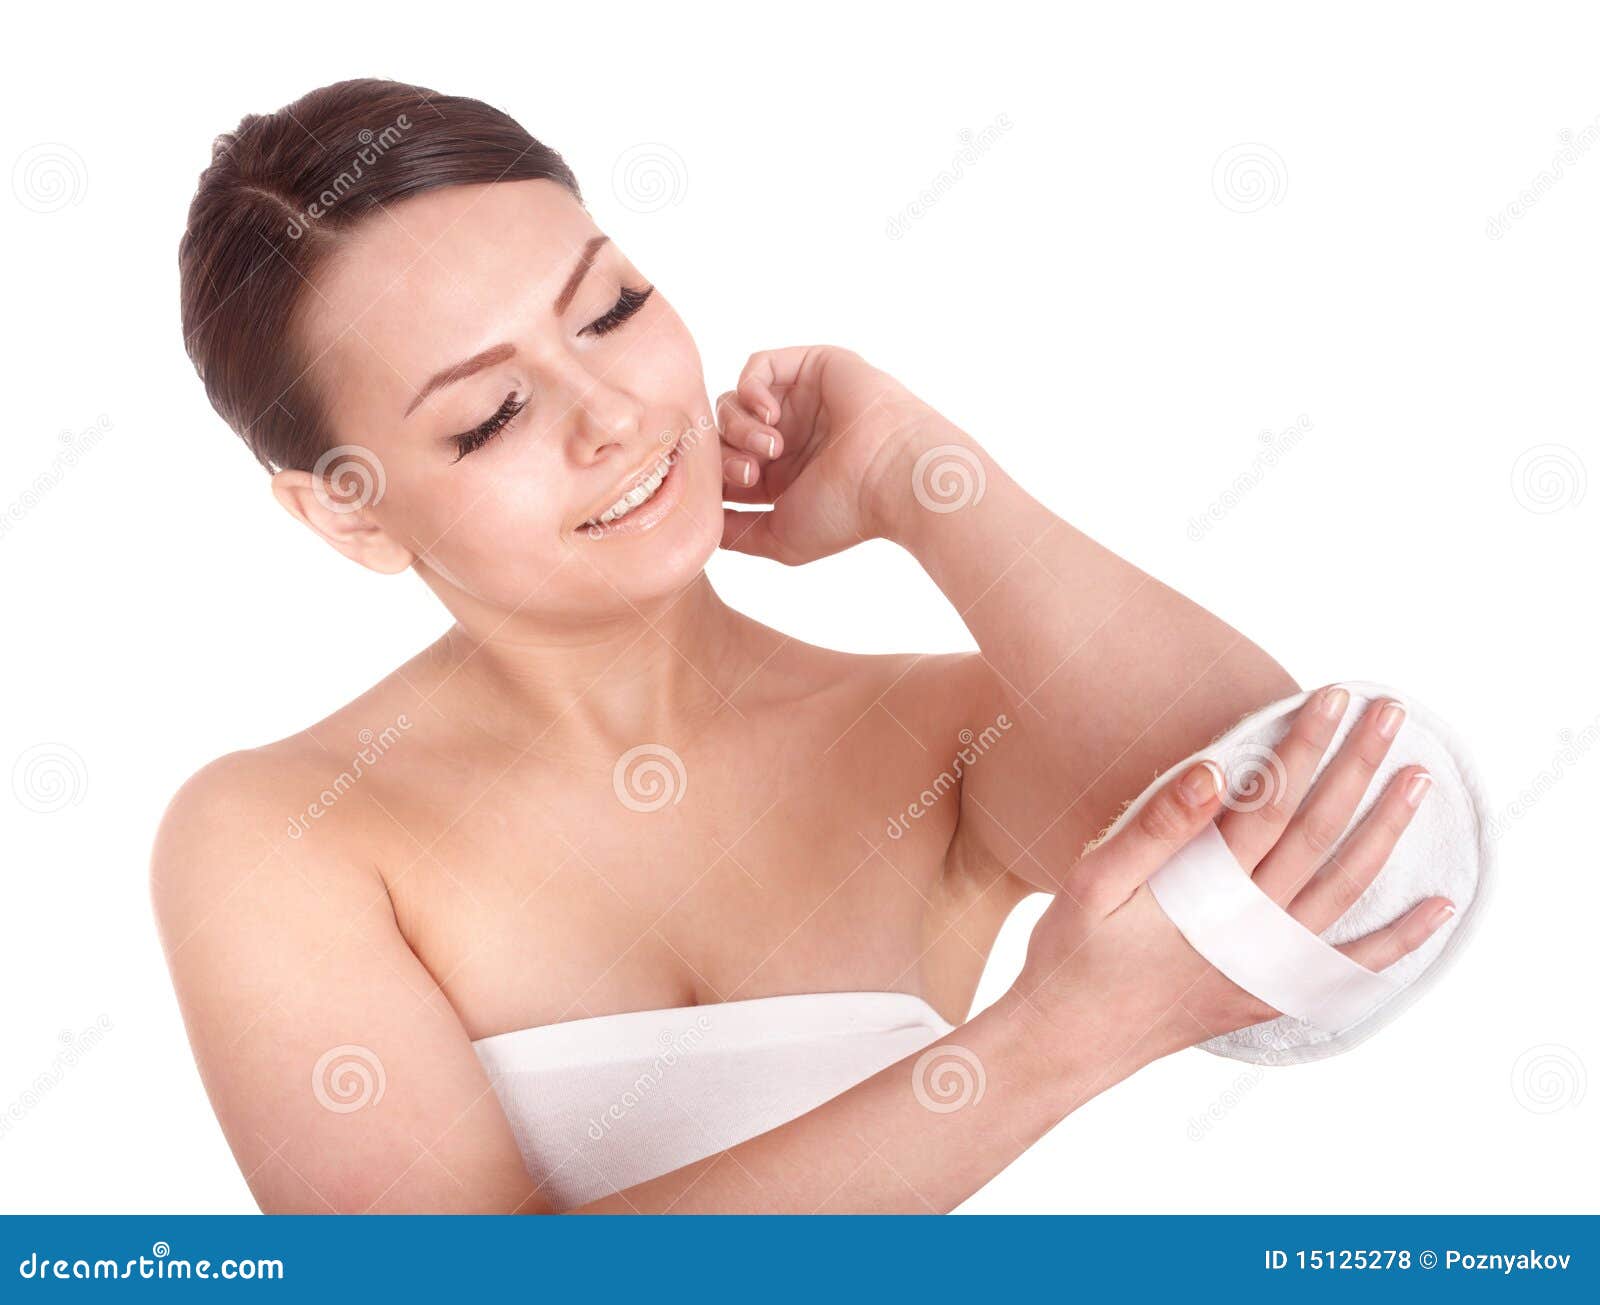 young woman scrubbing body.